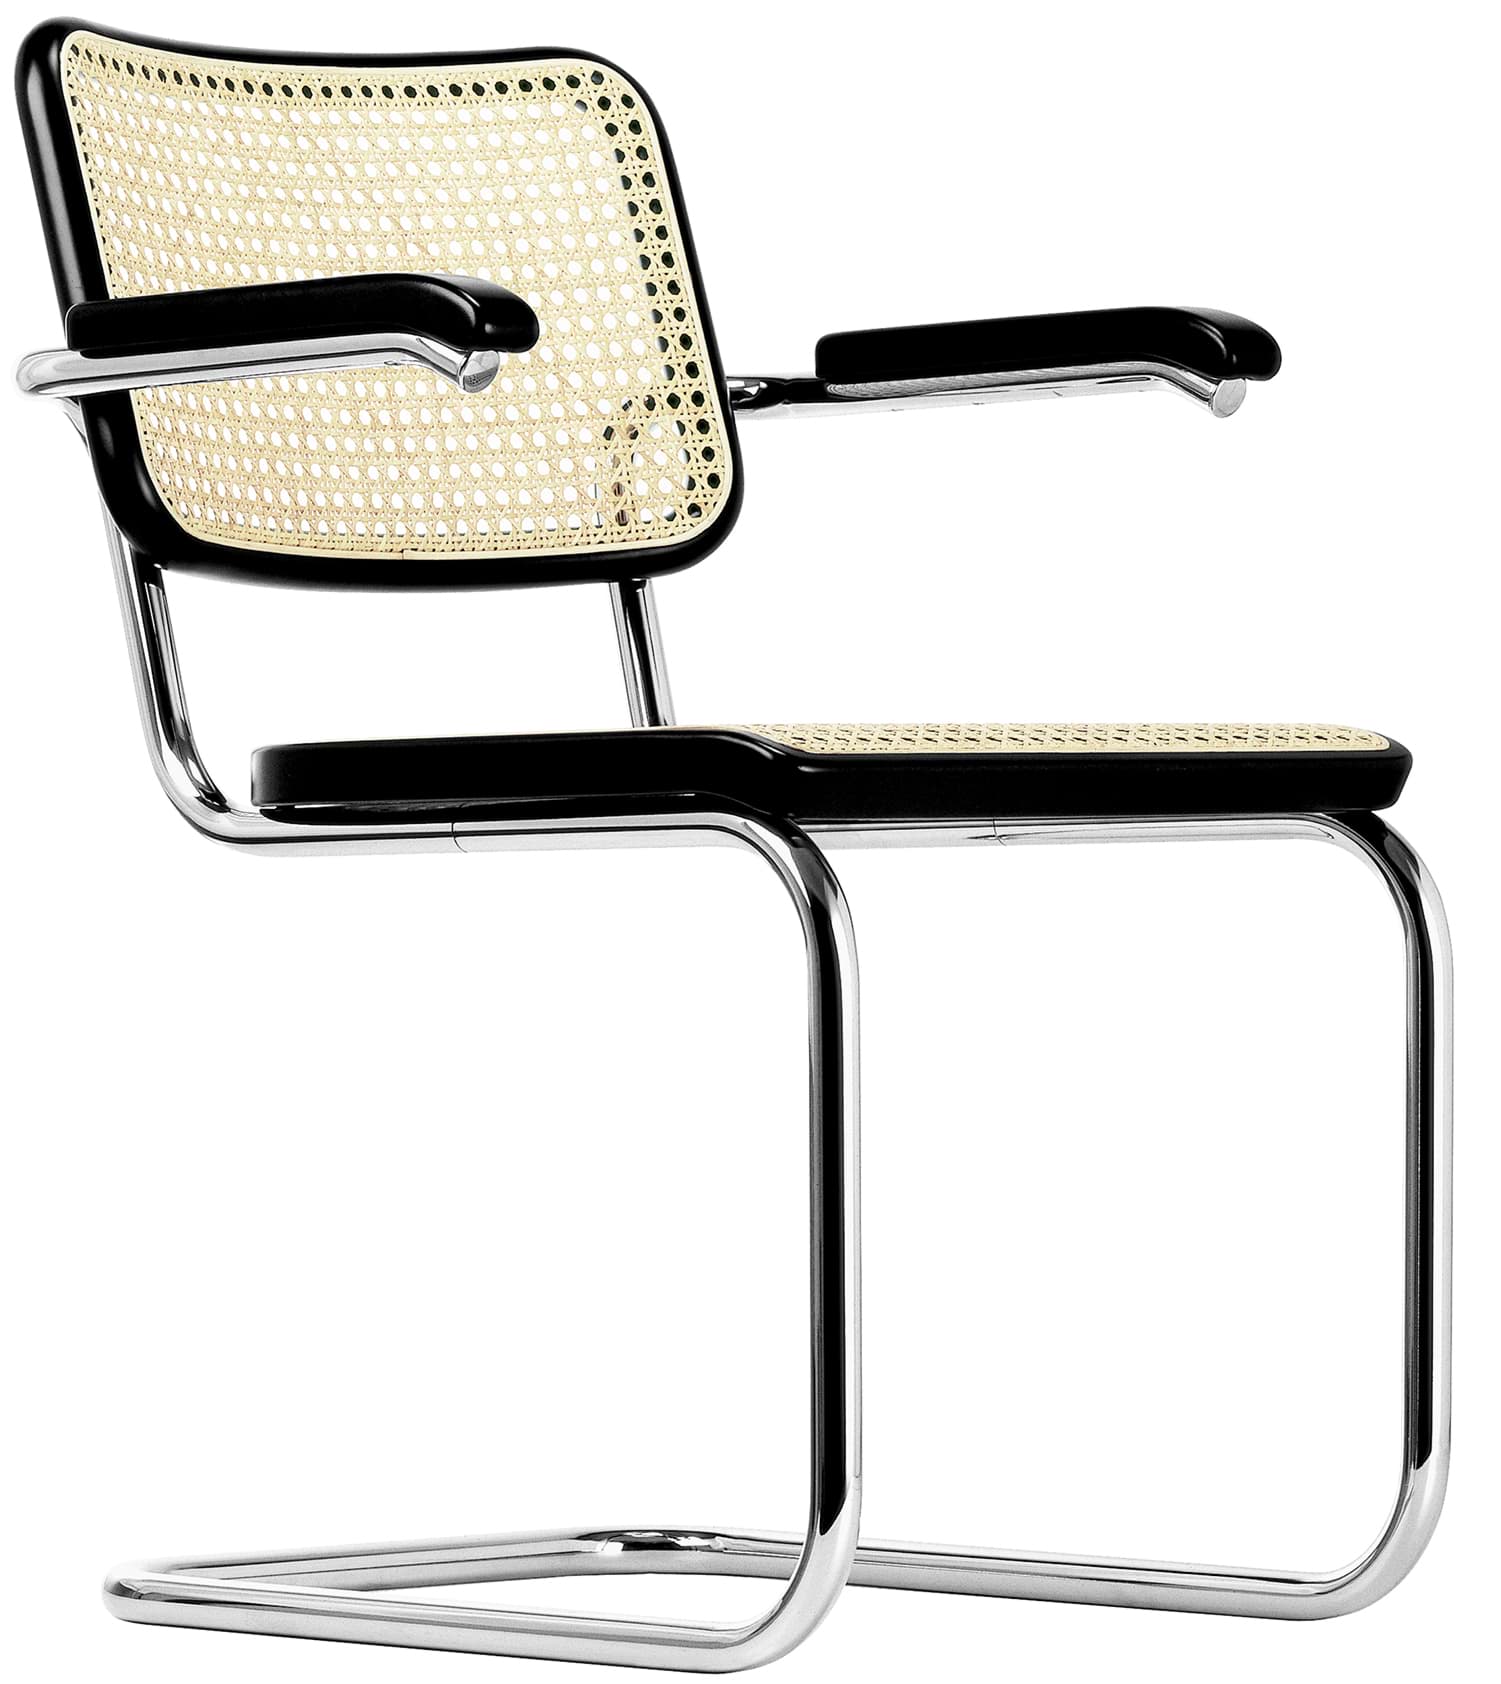 S 64 Breuer. V Bauhaus Chair Cantilever - Marcel Movement